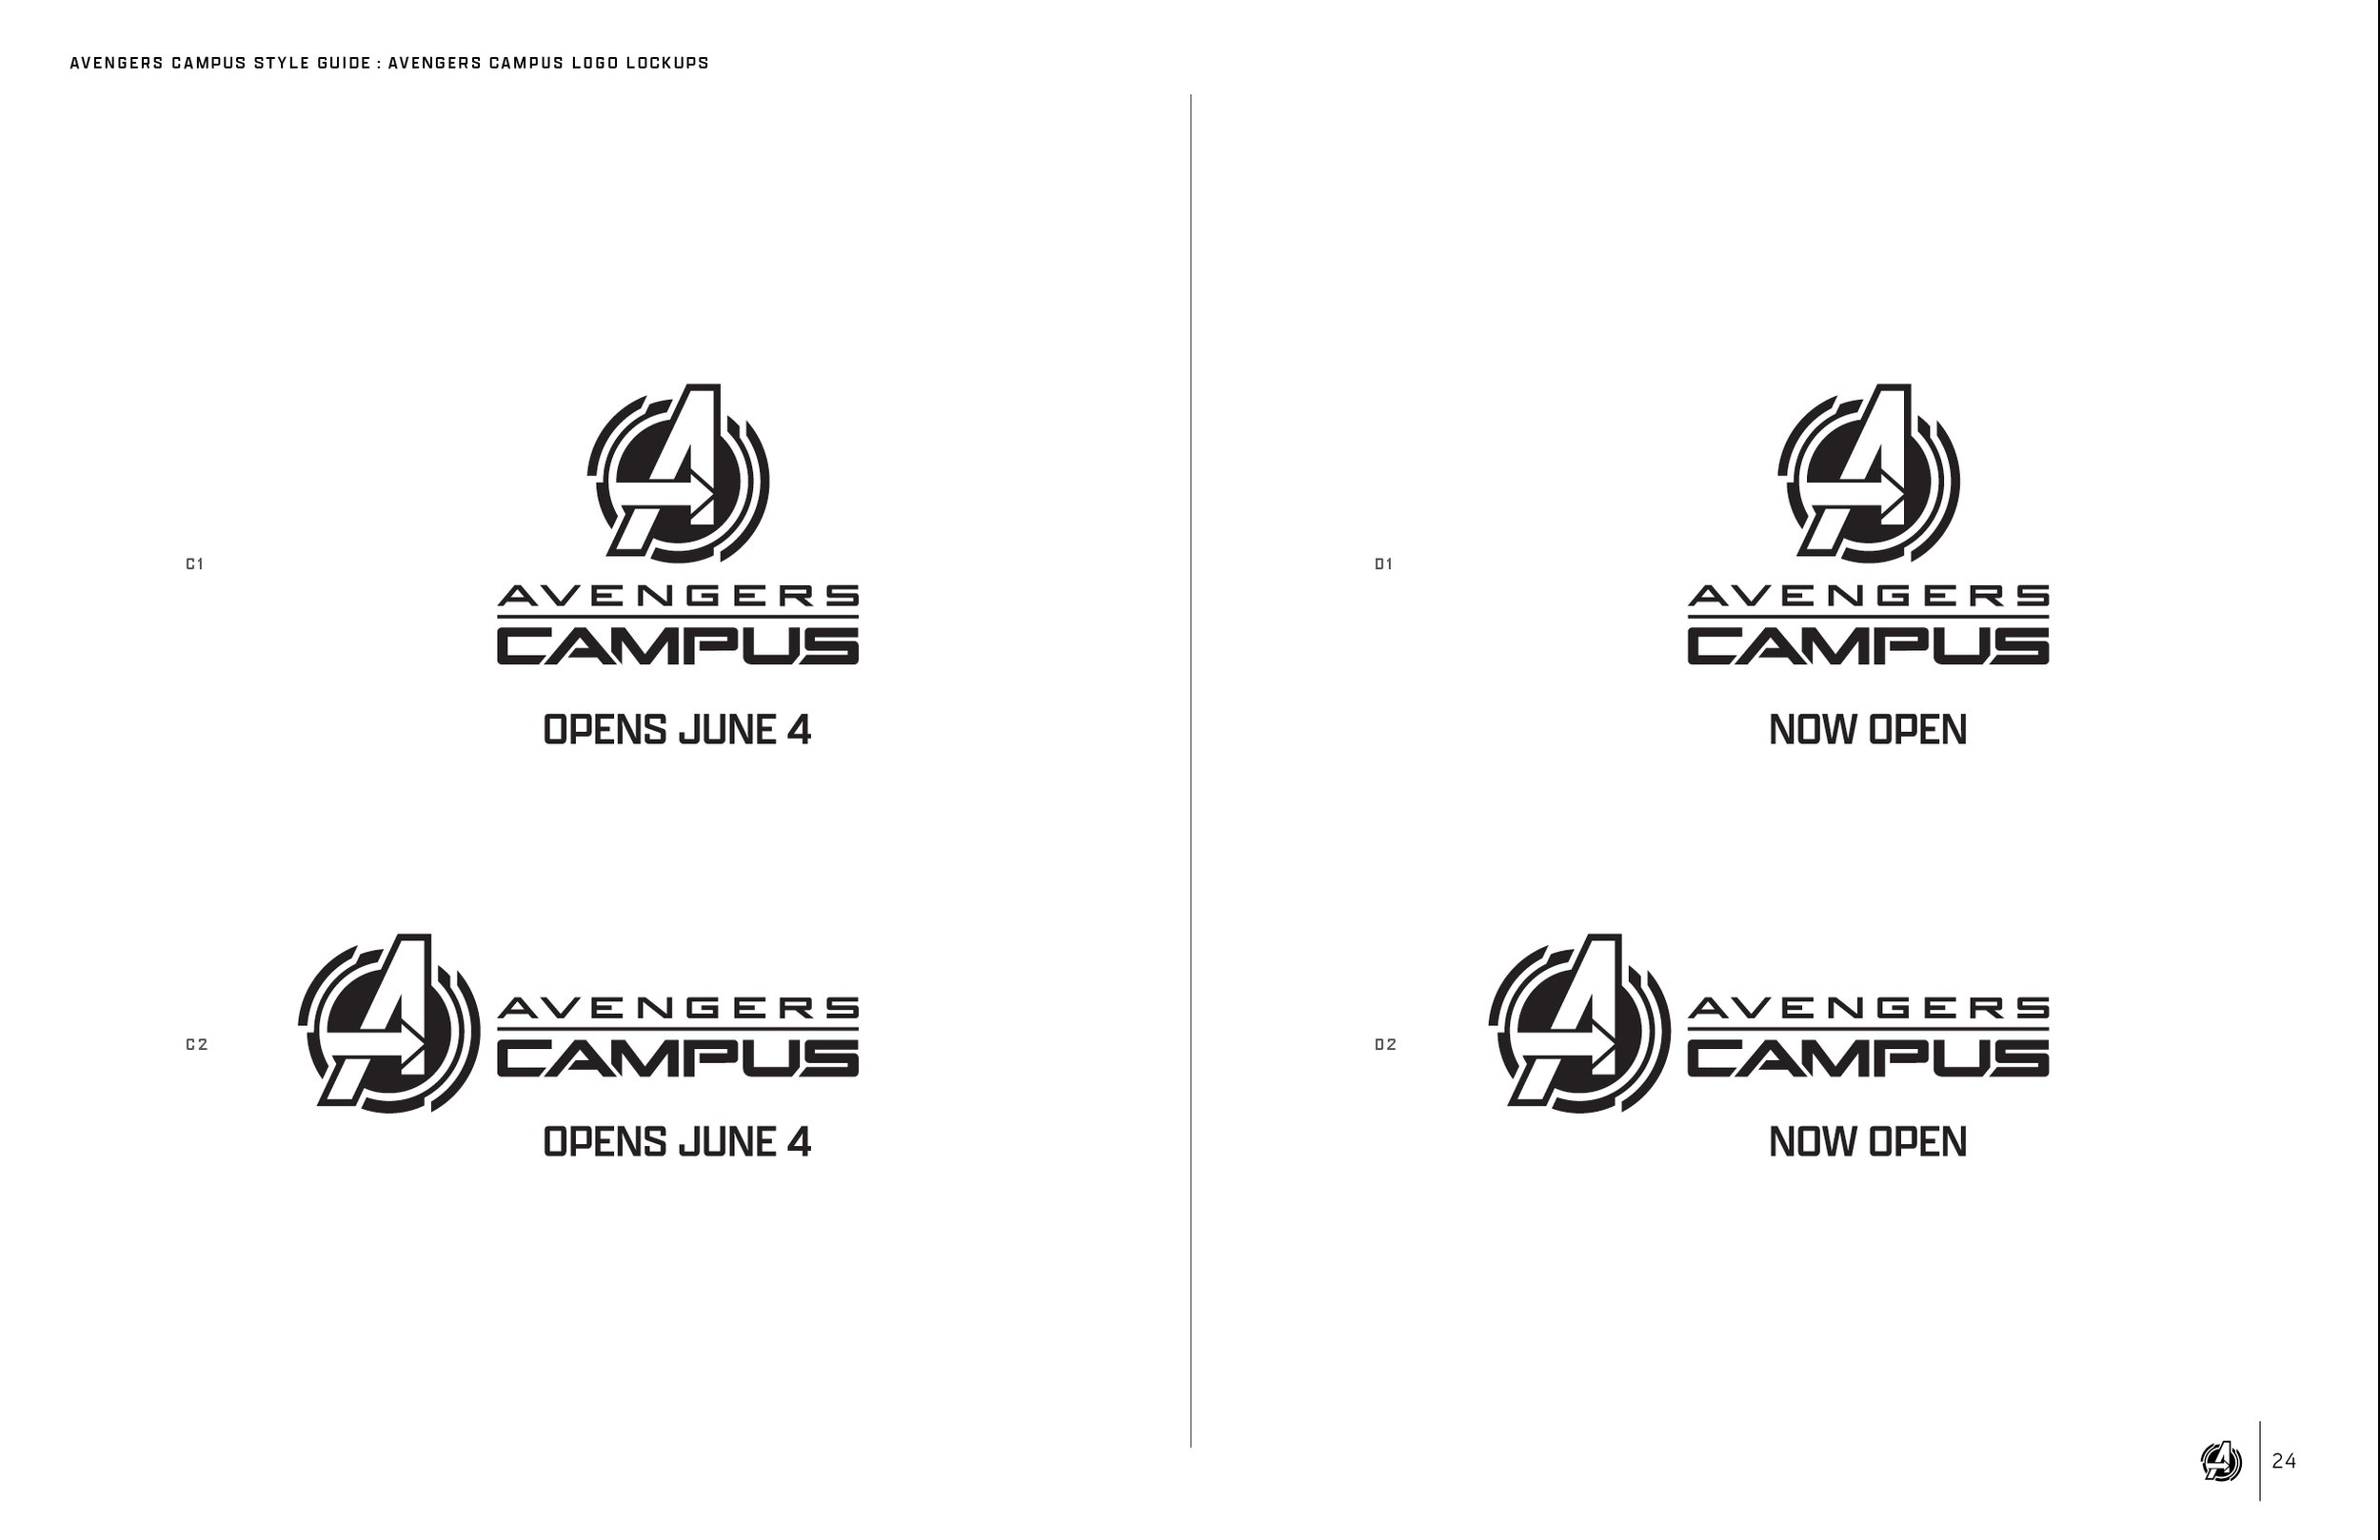 AvengersCampus_StyleGuide_Website_24.jpg